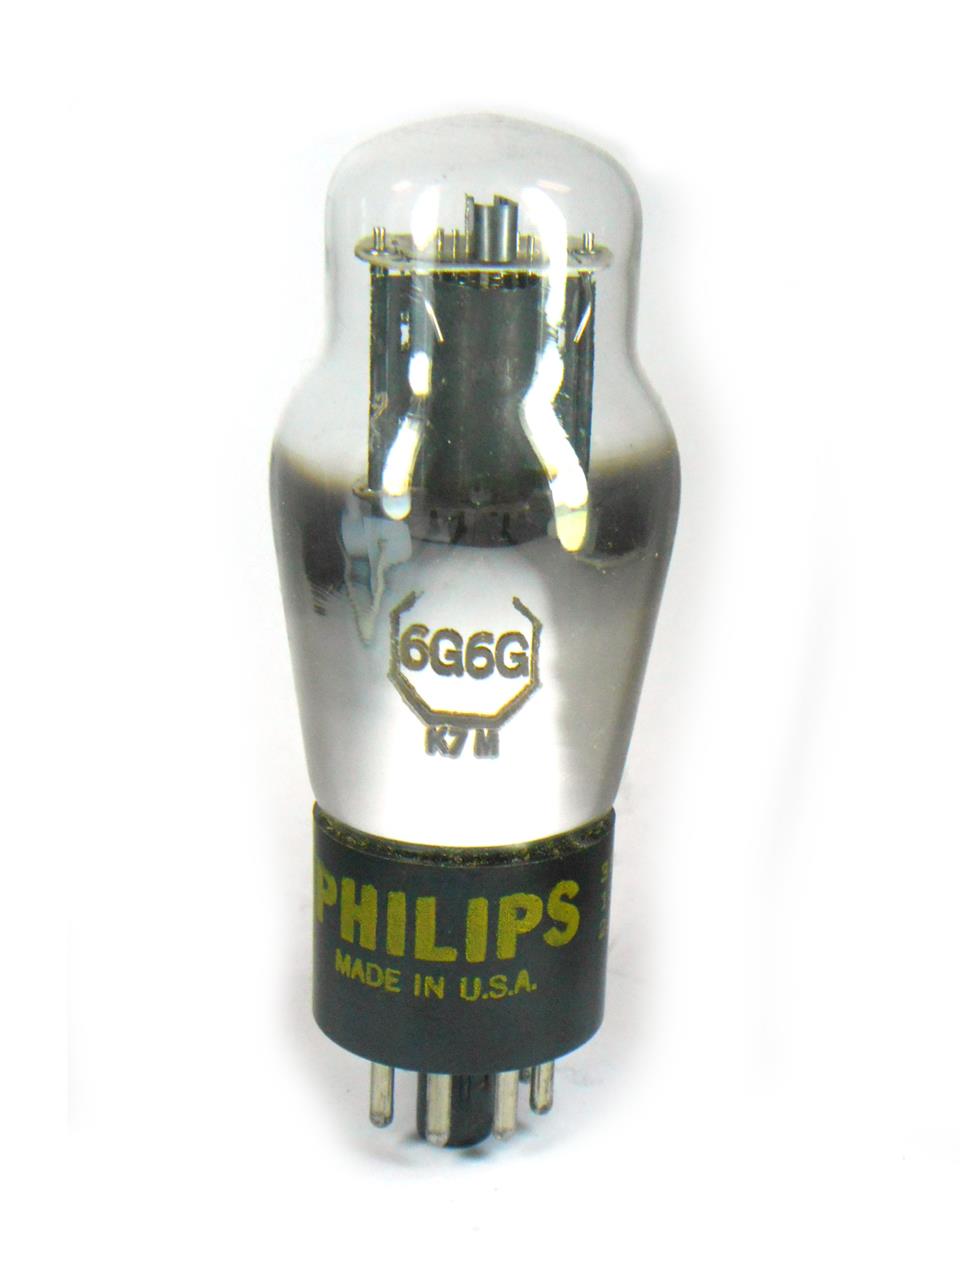 Válvula 6G6G Philips